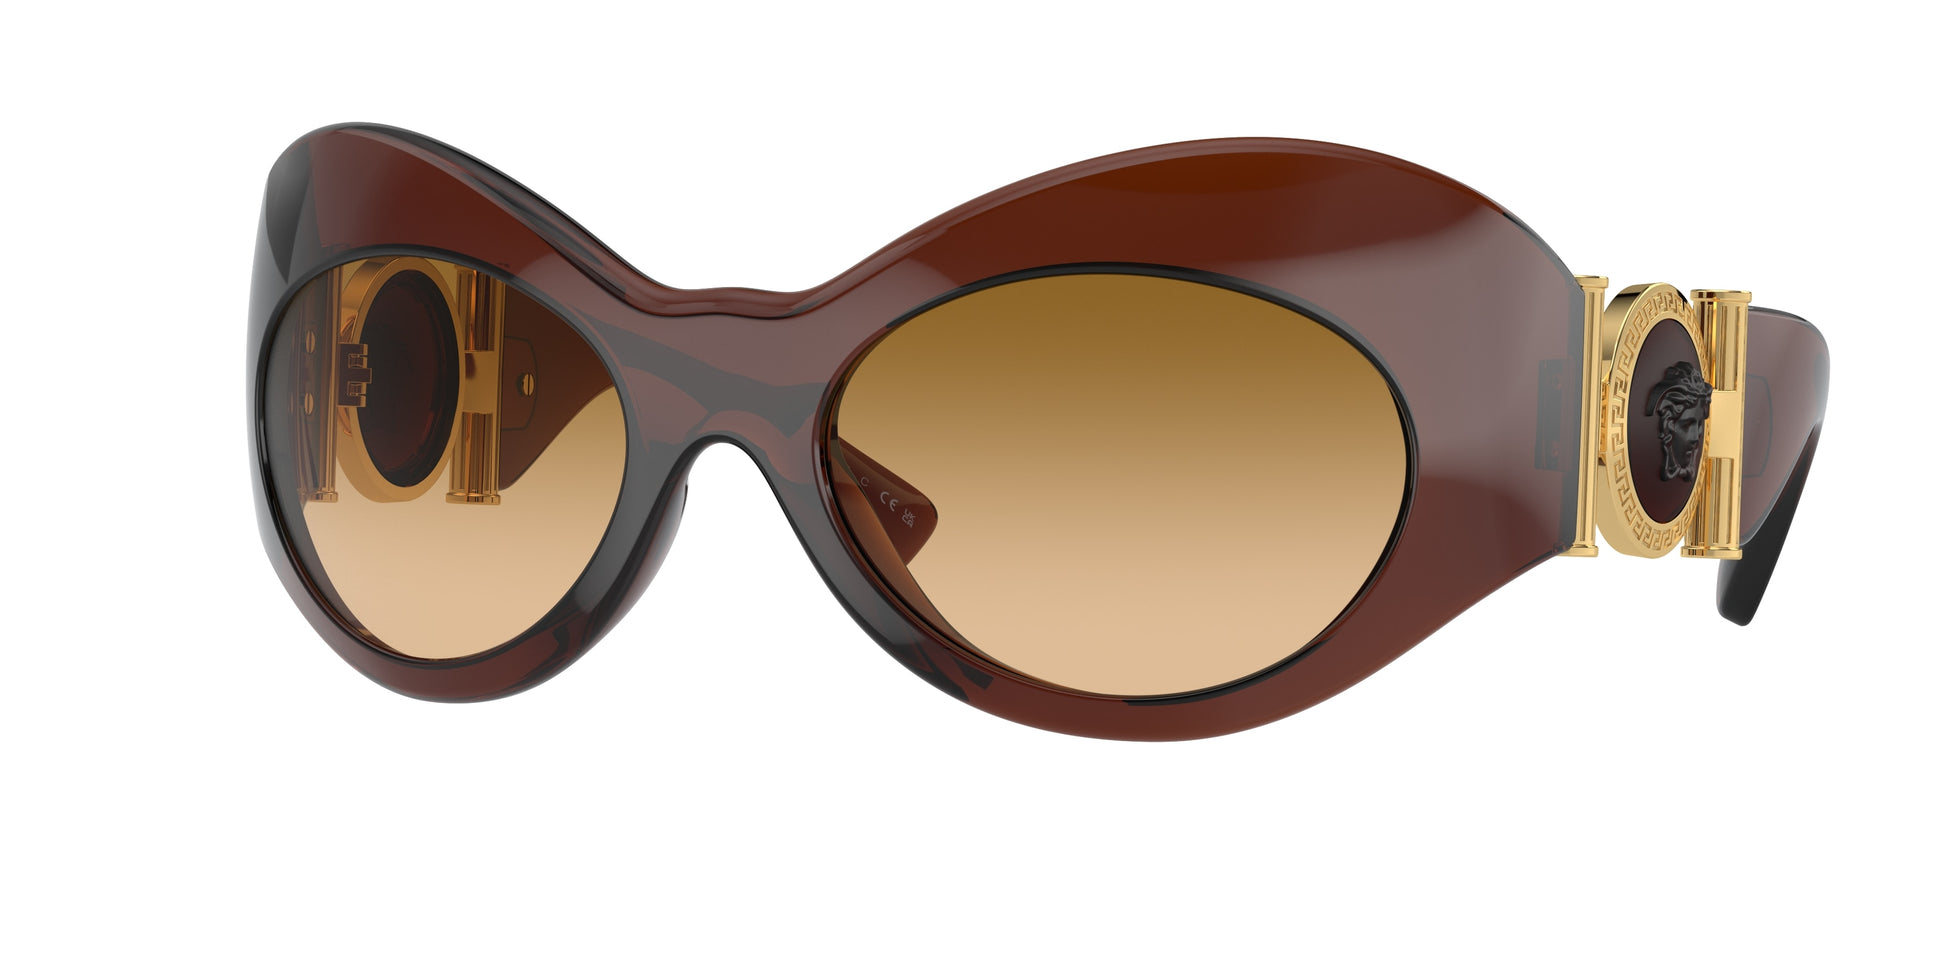 Versace VE4462 Irregular Sunglasses  54462L-Transparent Brown 58-115-20 - Color Map Brown